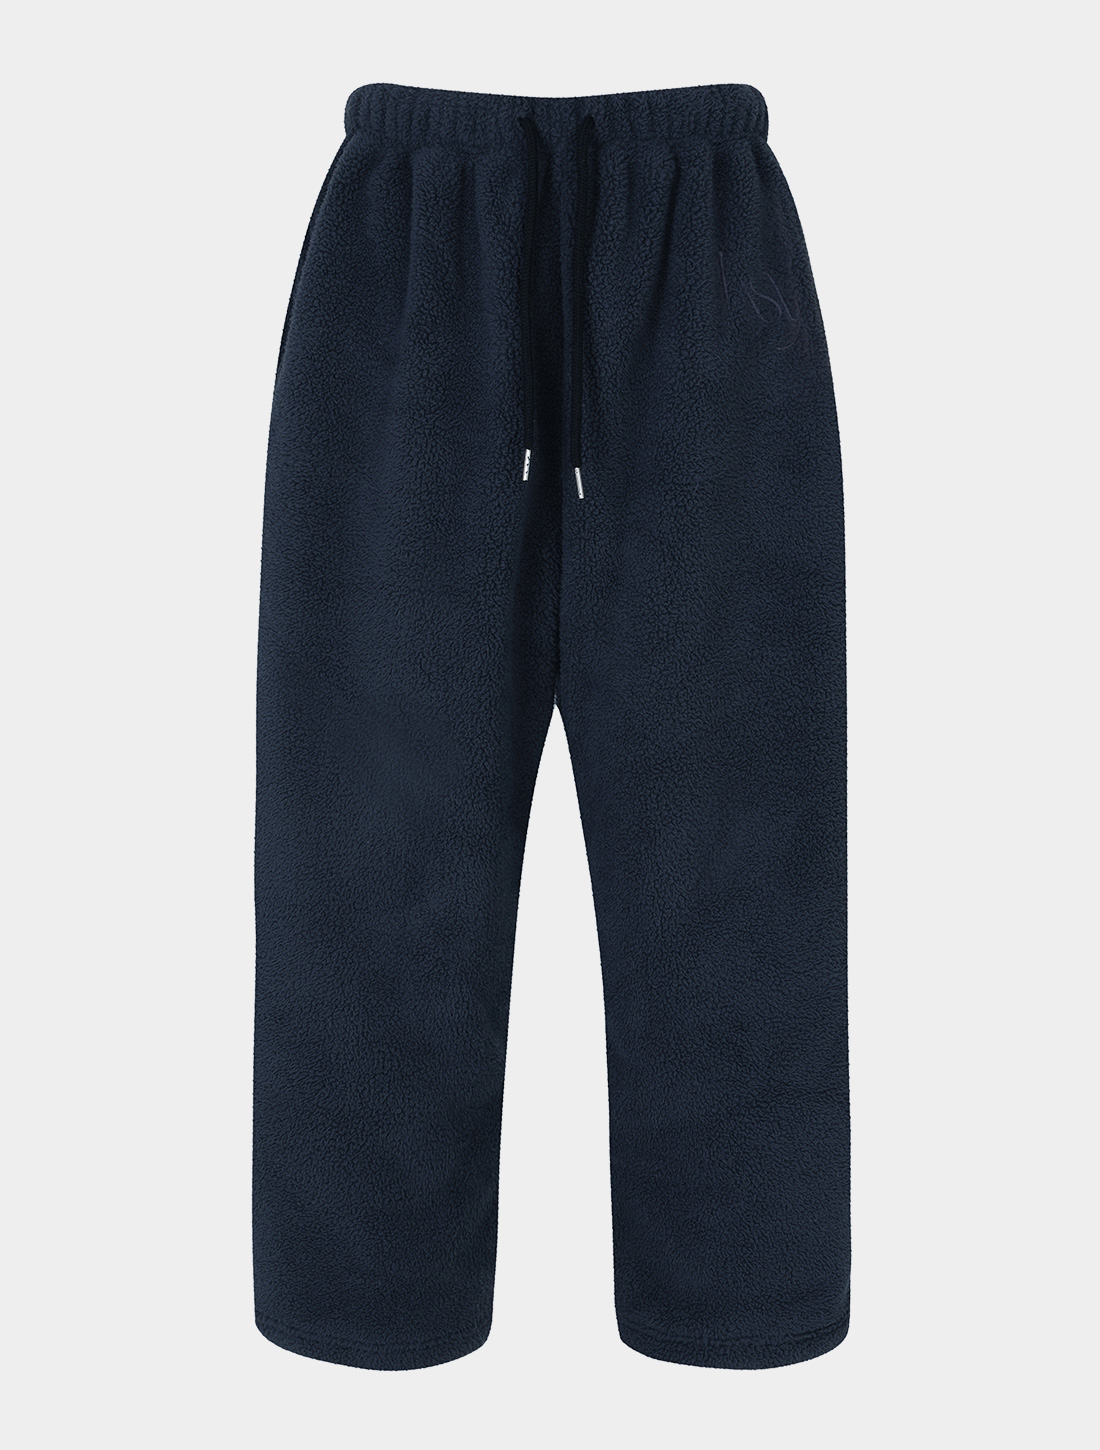 FUSE fleece jogger pants (navy)